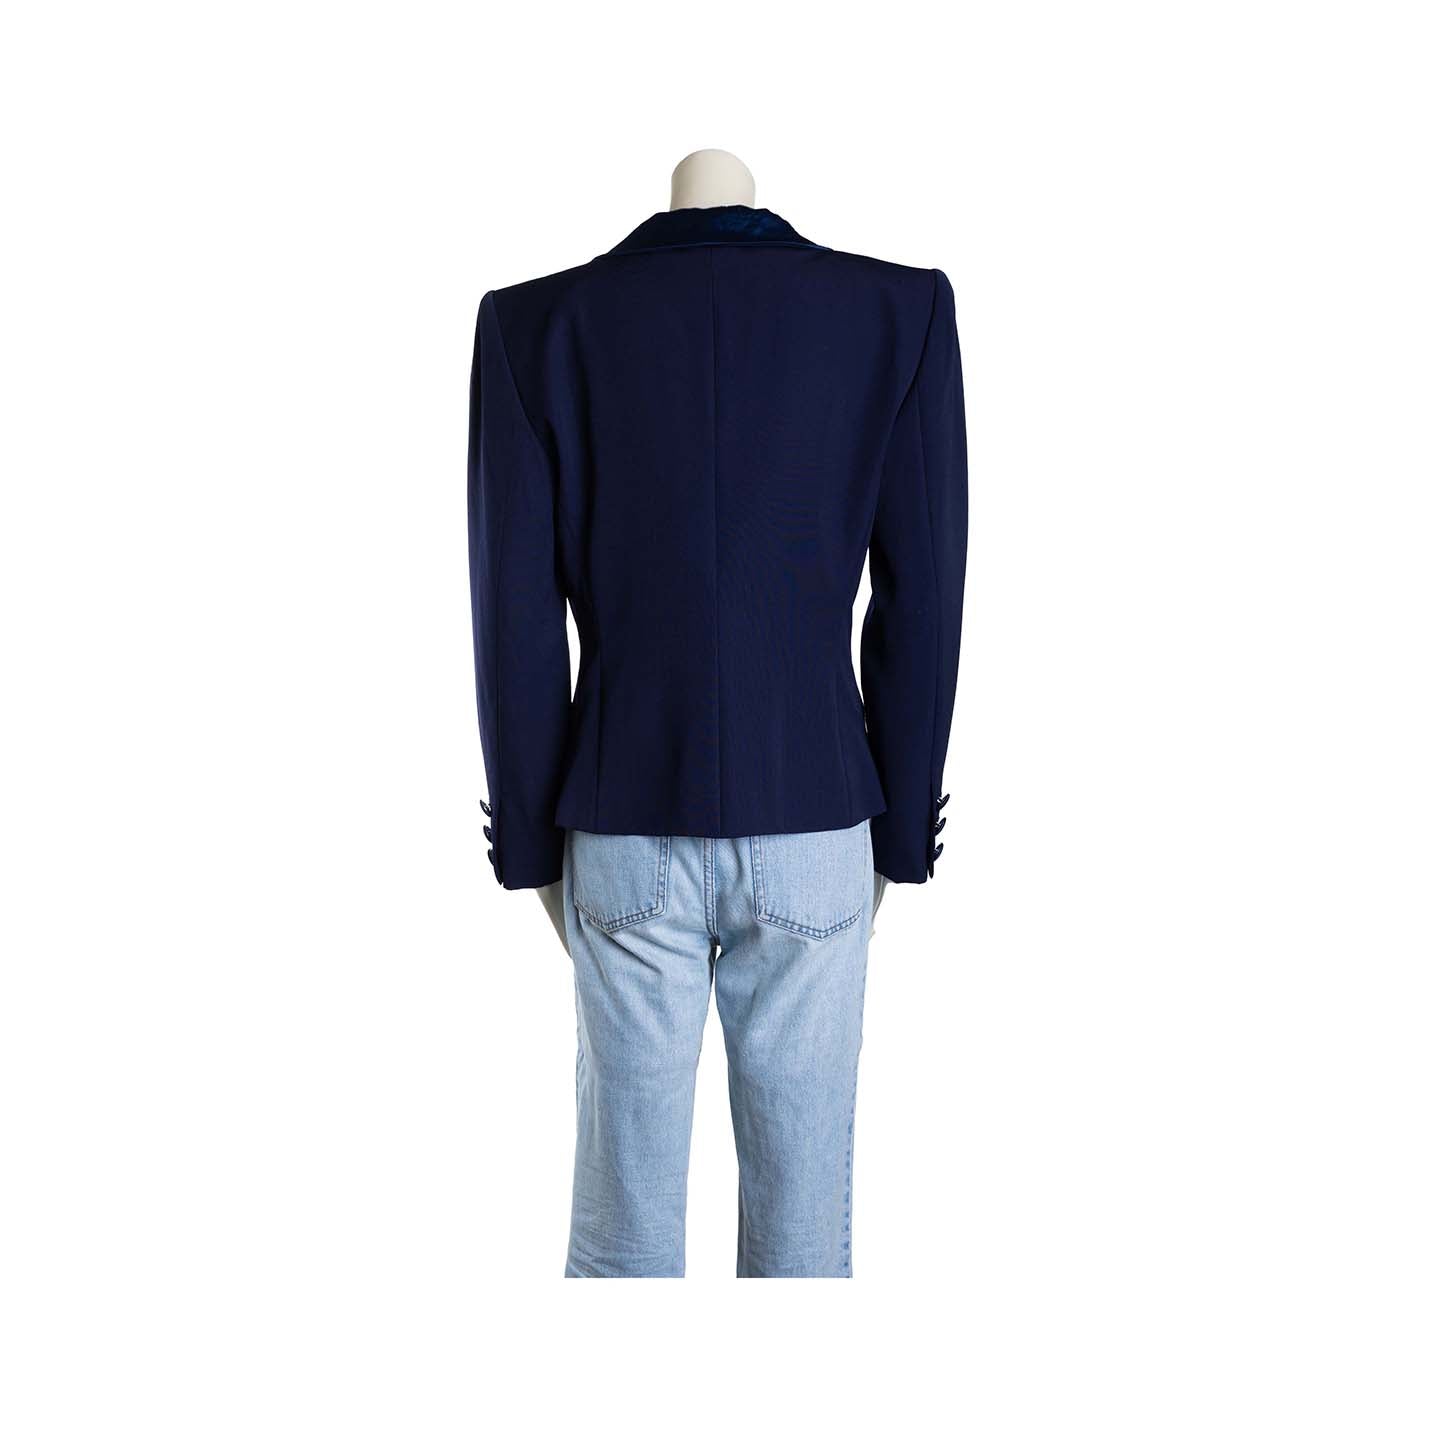 Vintage second hand Saint Laurent Tuxedo blazer in navy blue wool